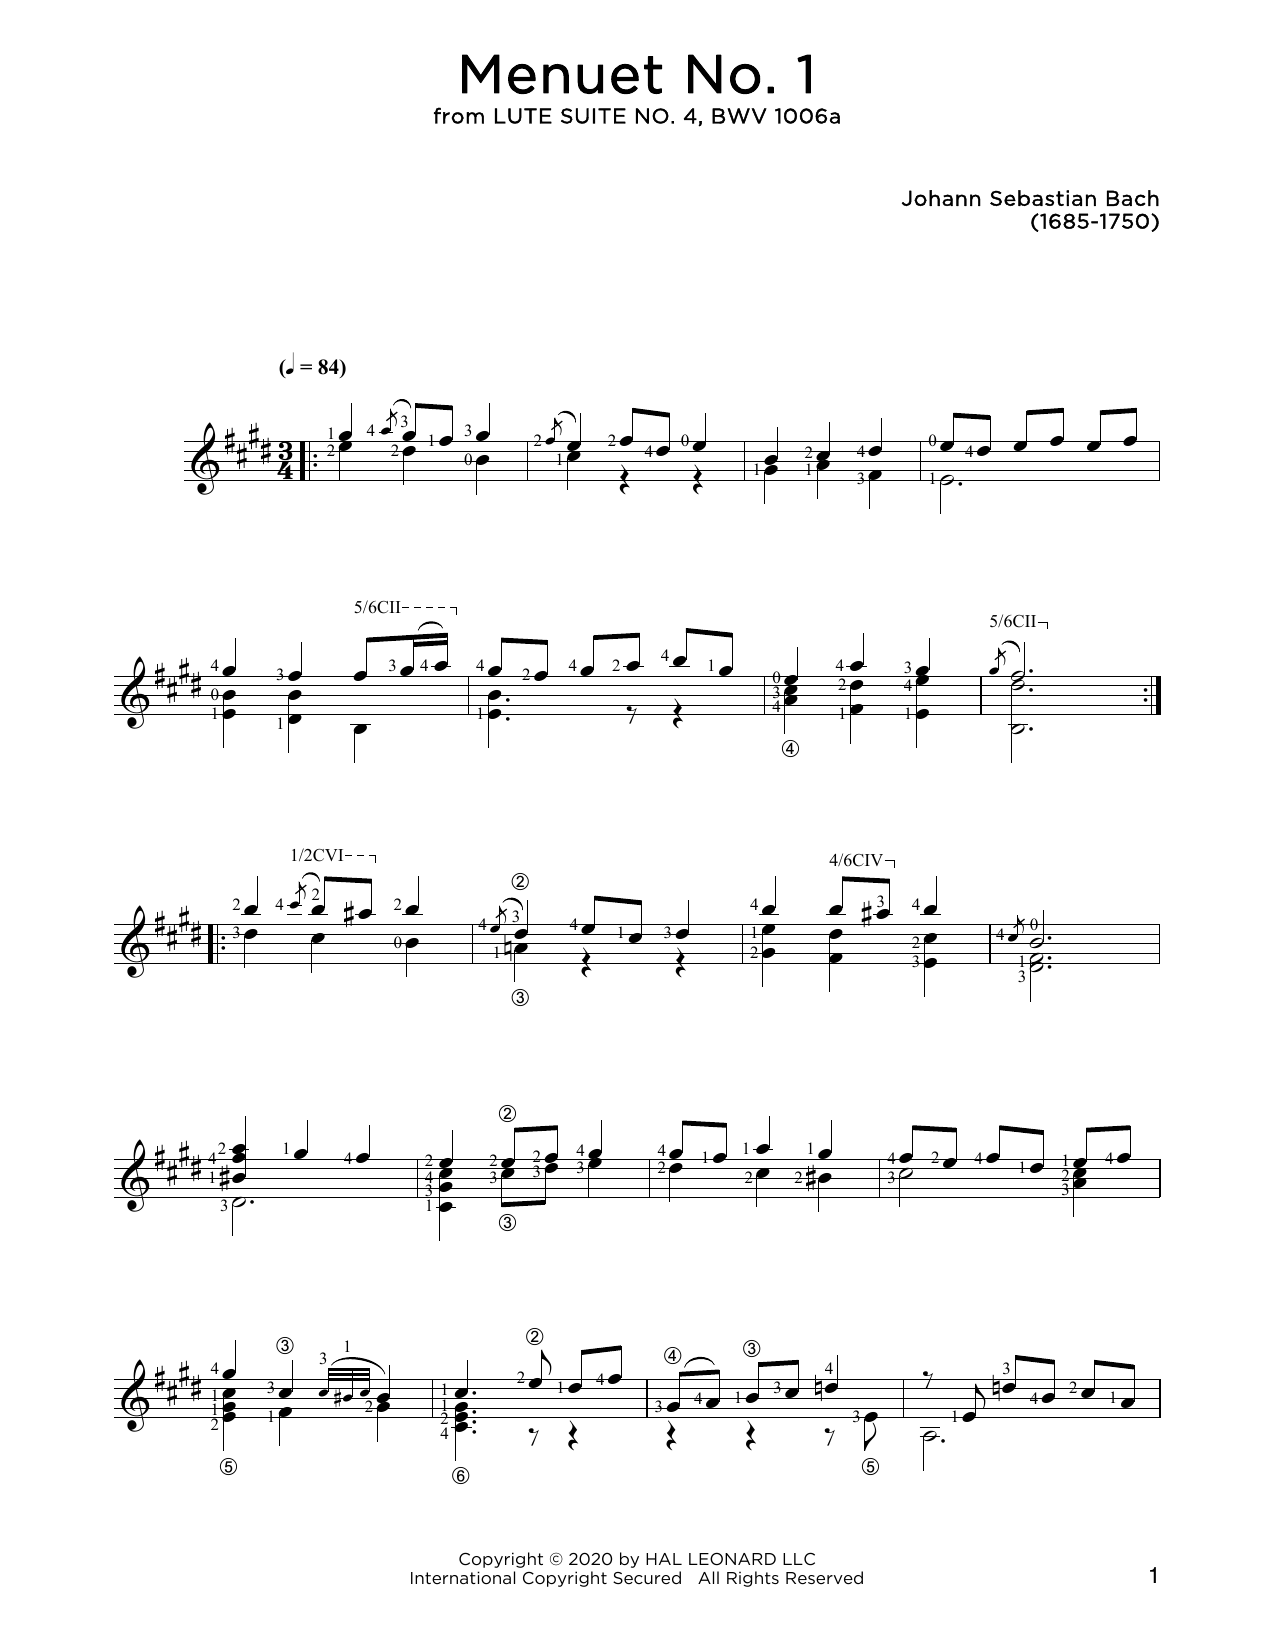 Johann Sebastian Bach Menuet No. 1 Sheet Music Notes & Chords for Solo Guitar - Download or Print PDF